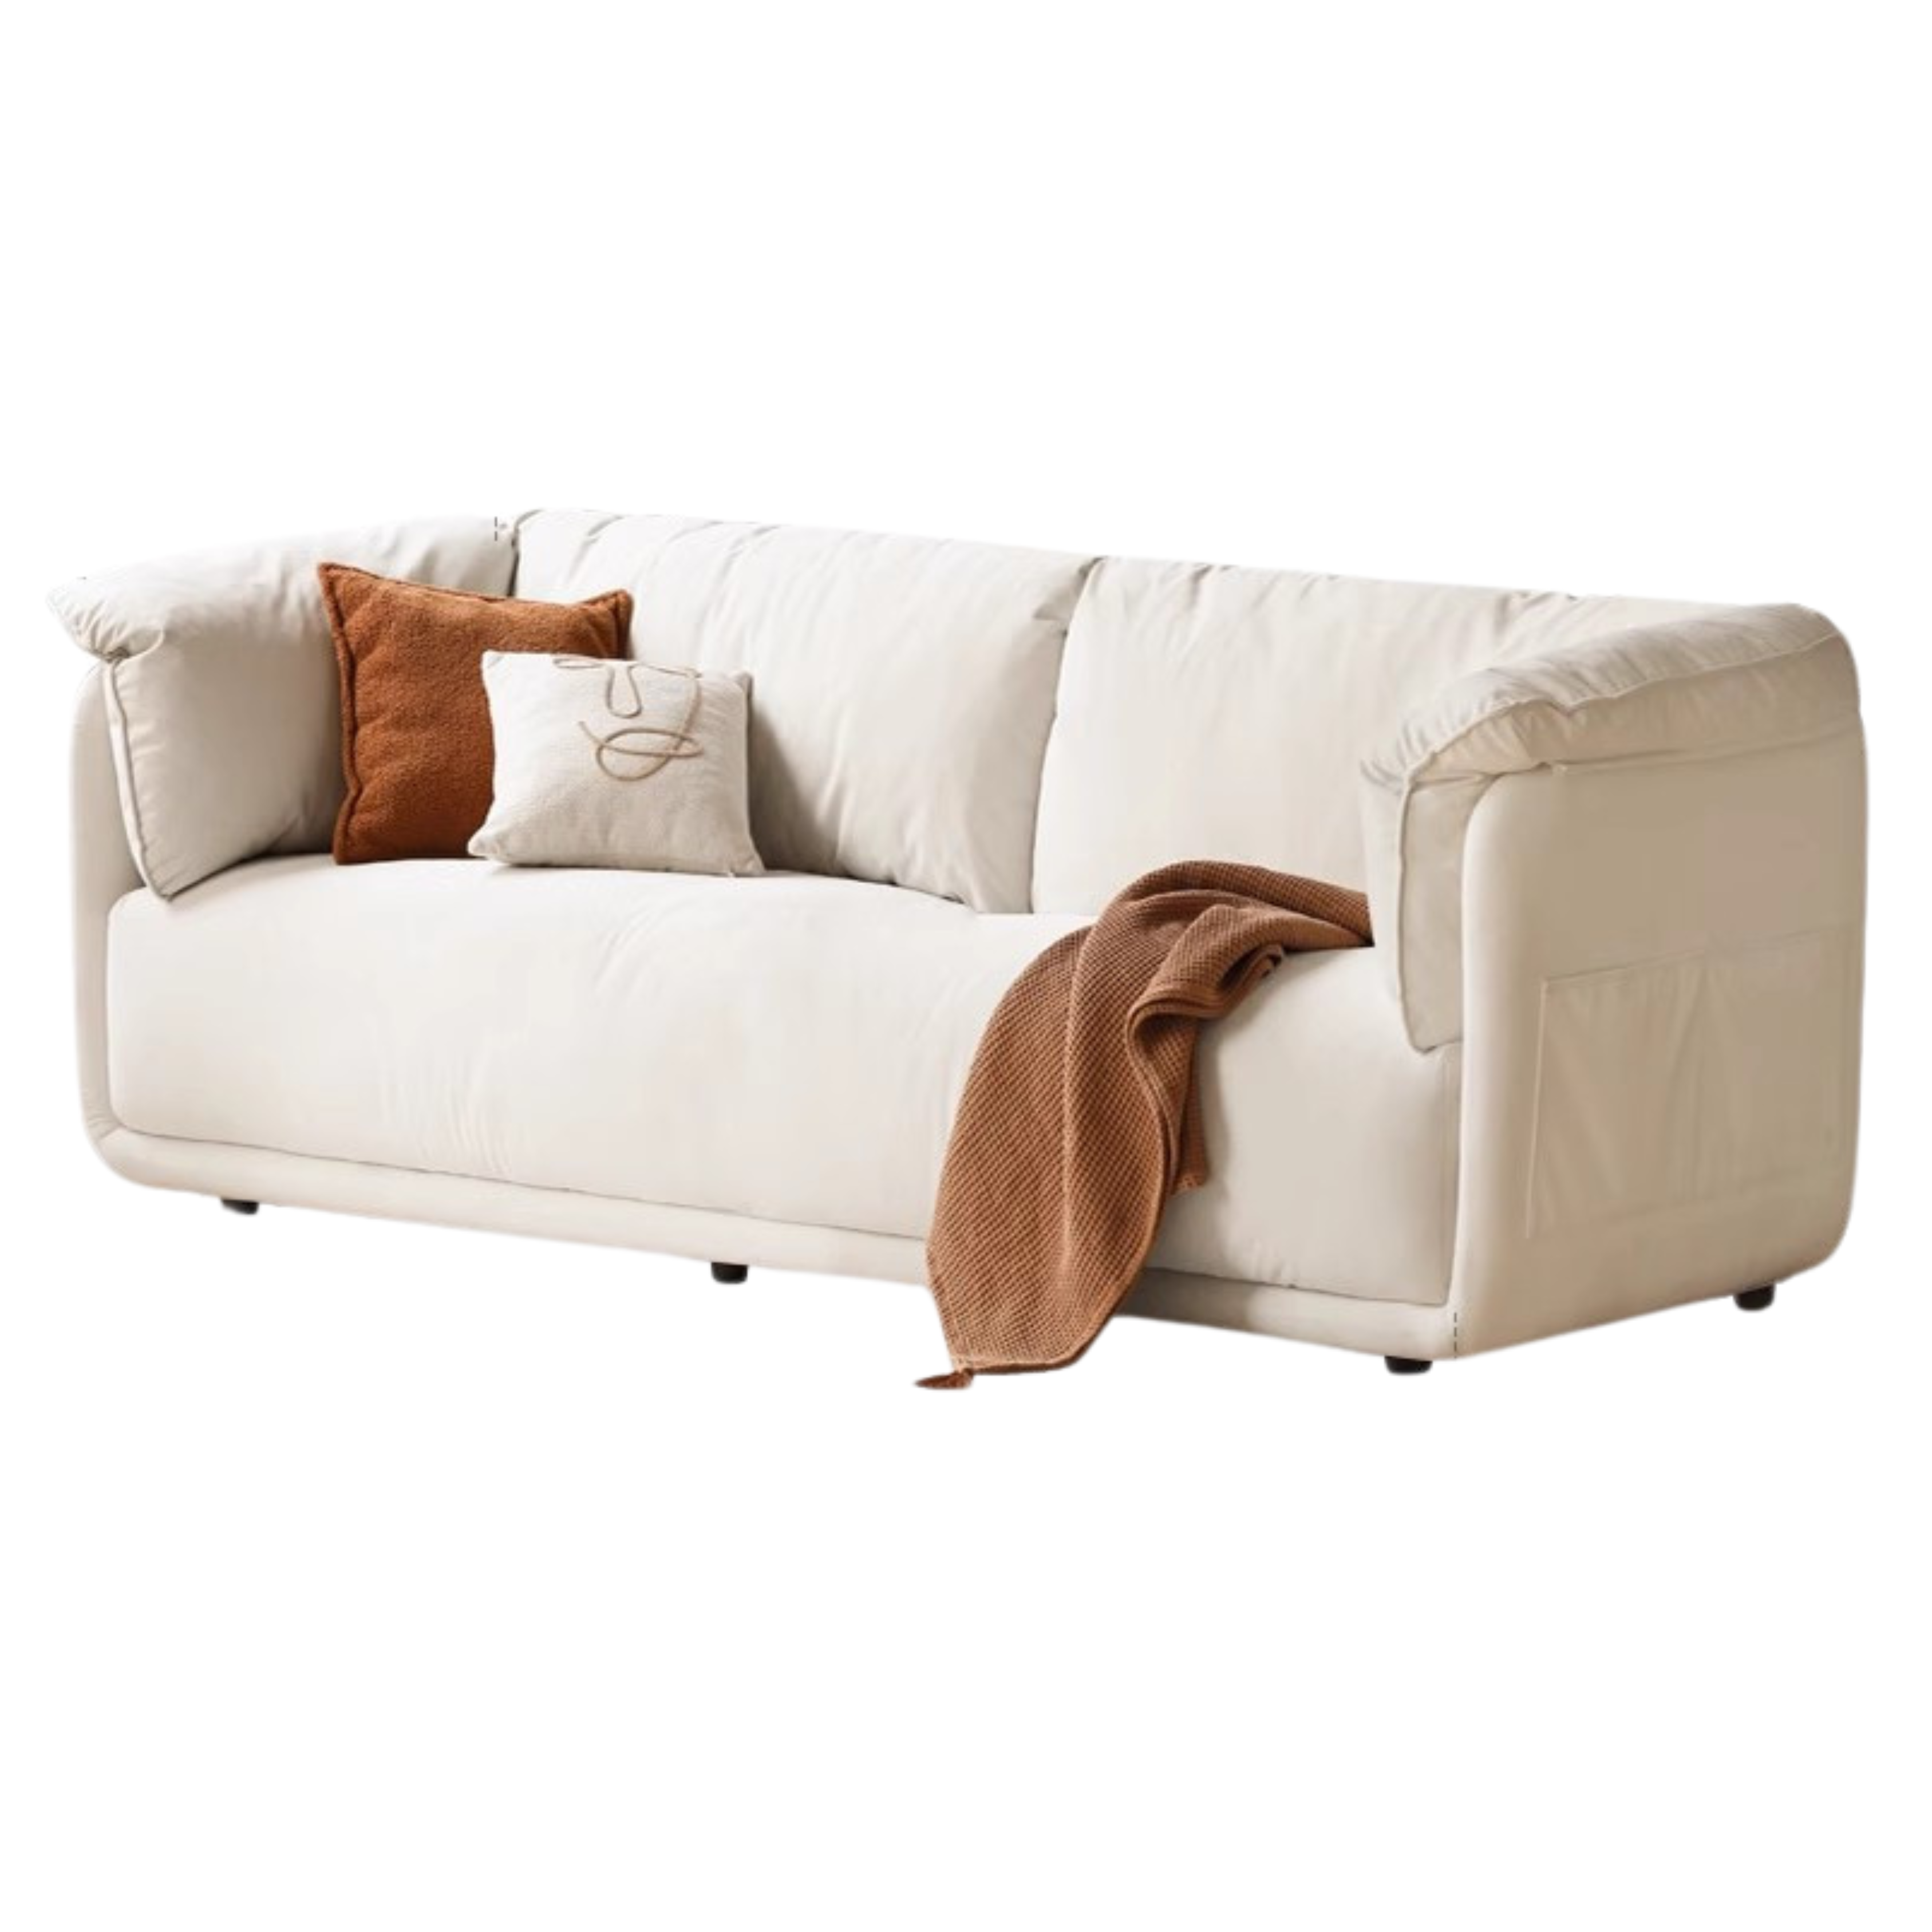 Fabric down sofa white cream style)